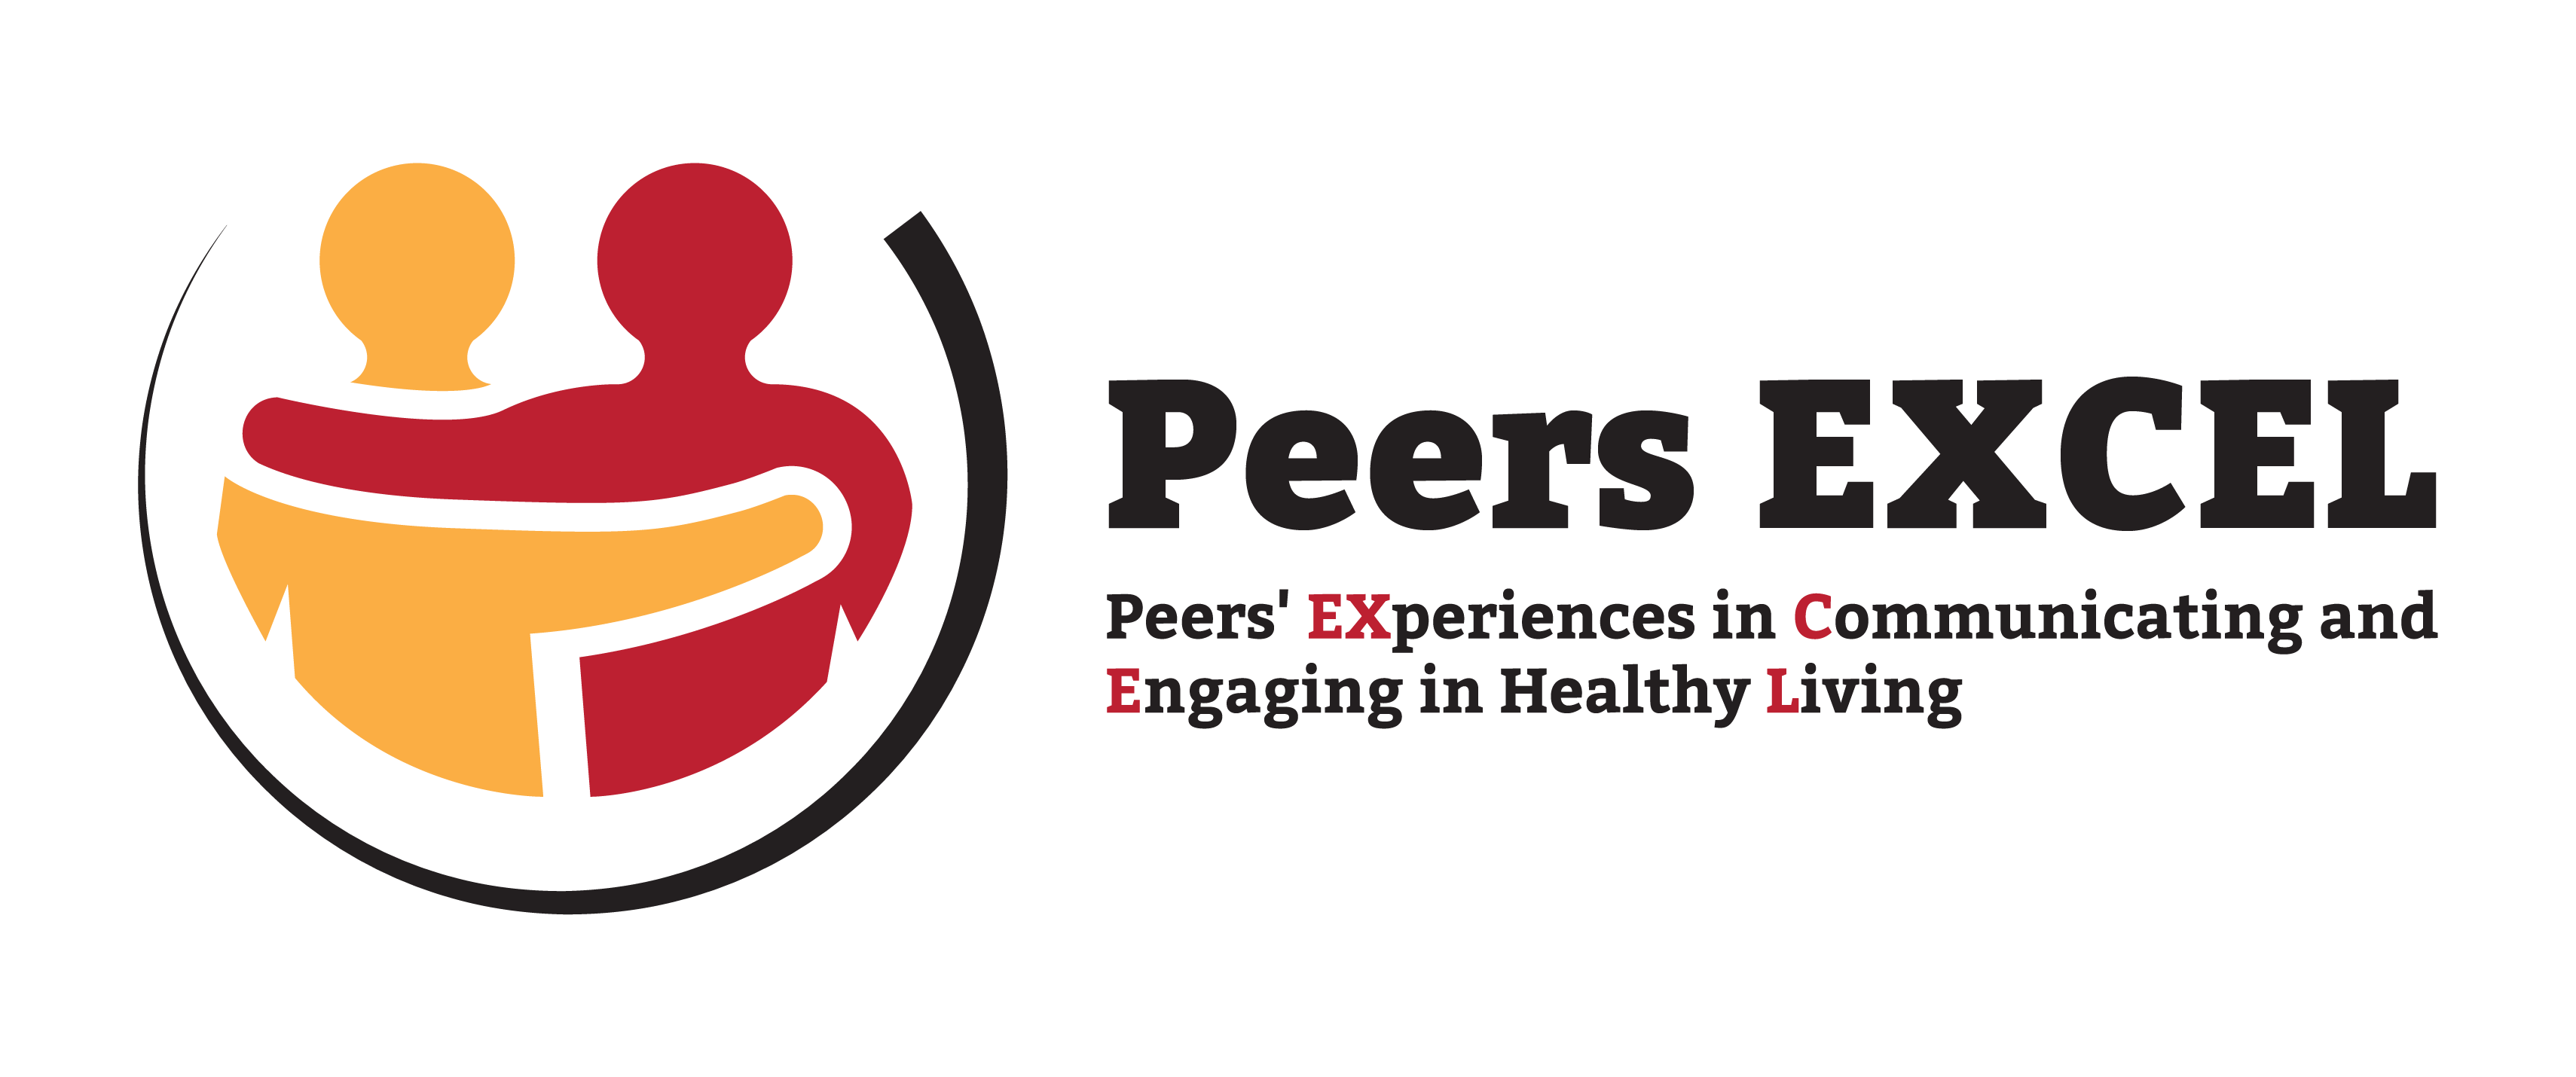 Logo for Peers EXCEL, reading "Peers EXCEL:  Peers' experiences in communicating and engaging in healthy living"